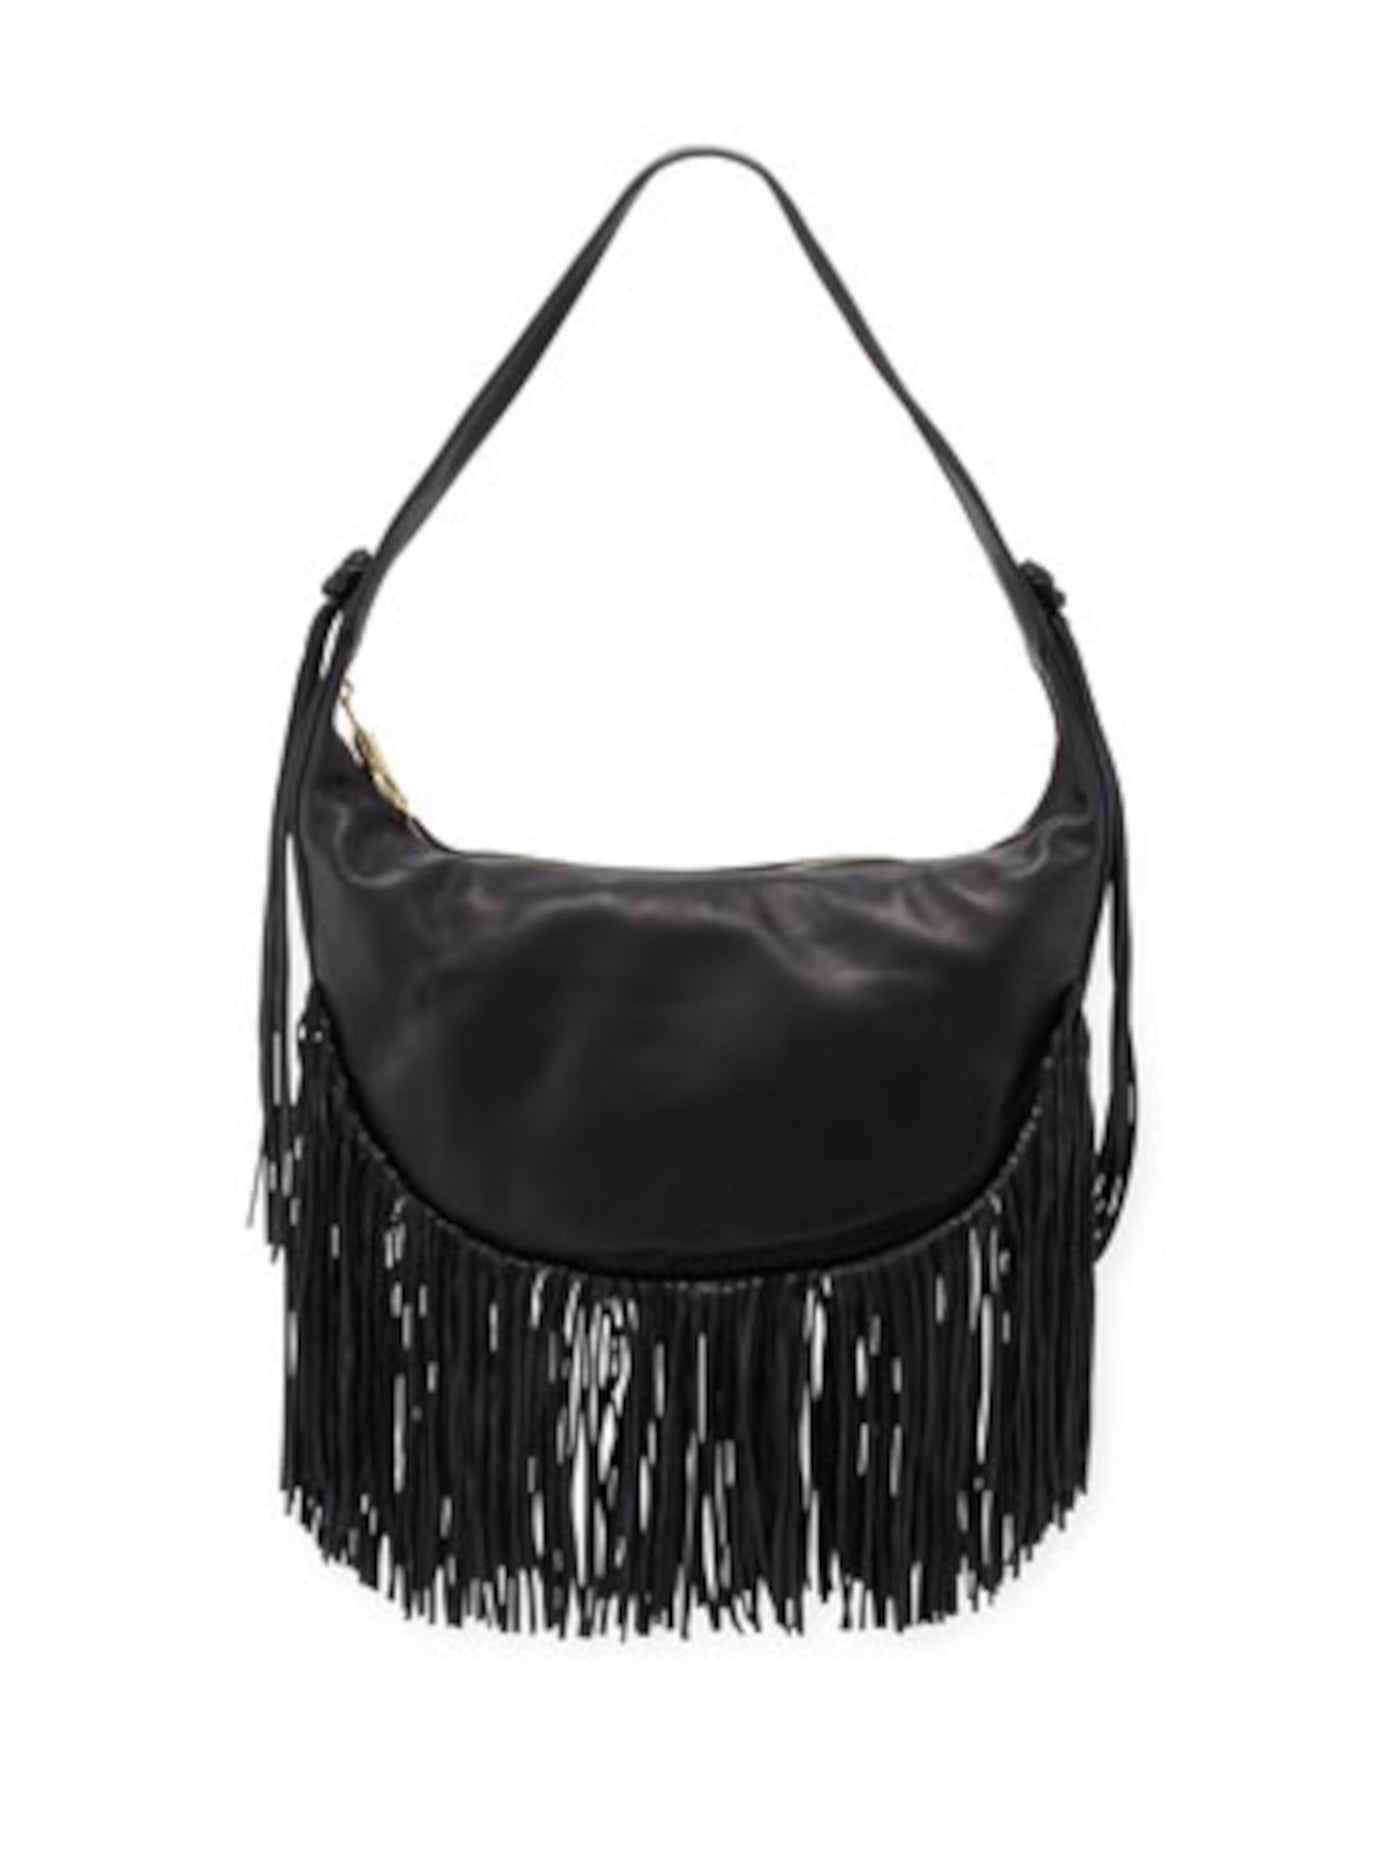 ELIZABETH AND JAMES Women's Black Solid Fringed Single Strap Hobo Handbag Purse